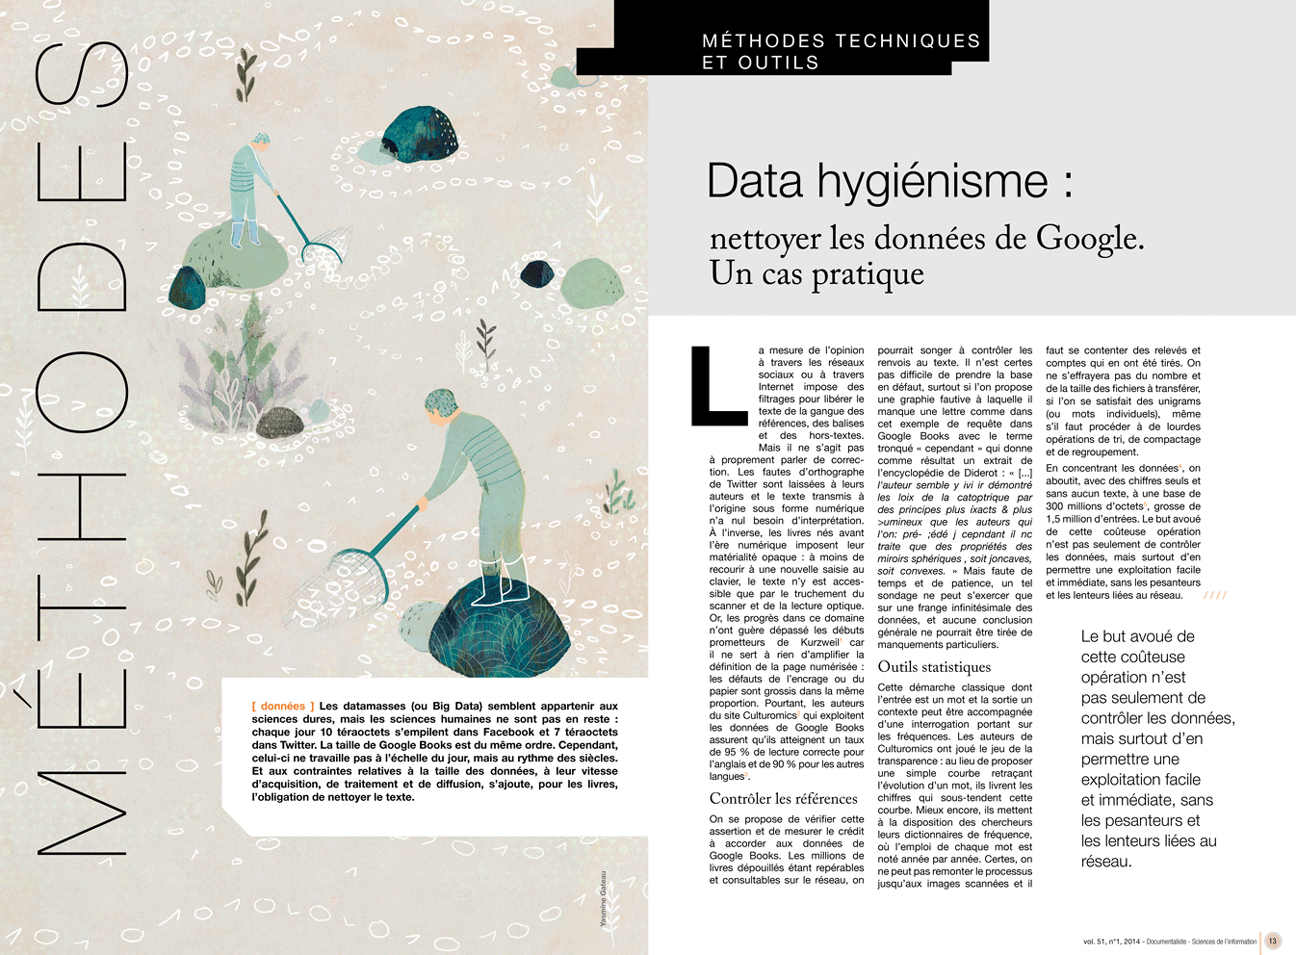 yasmine gateau, illustration, documentaliste, I2D, editorial illustration, data hygienisme